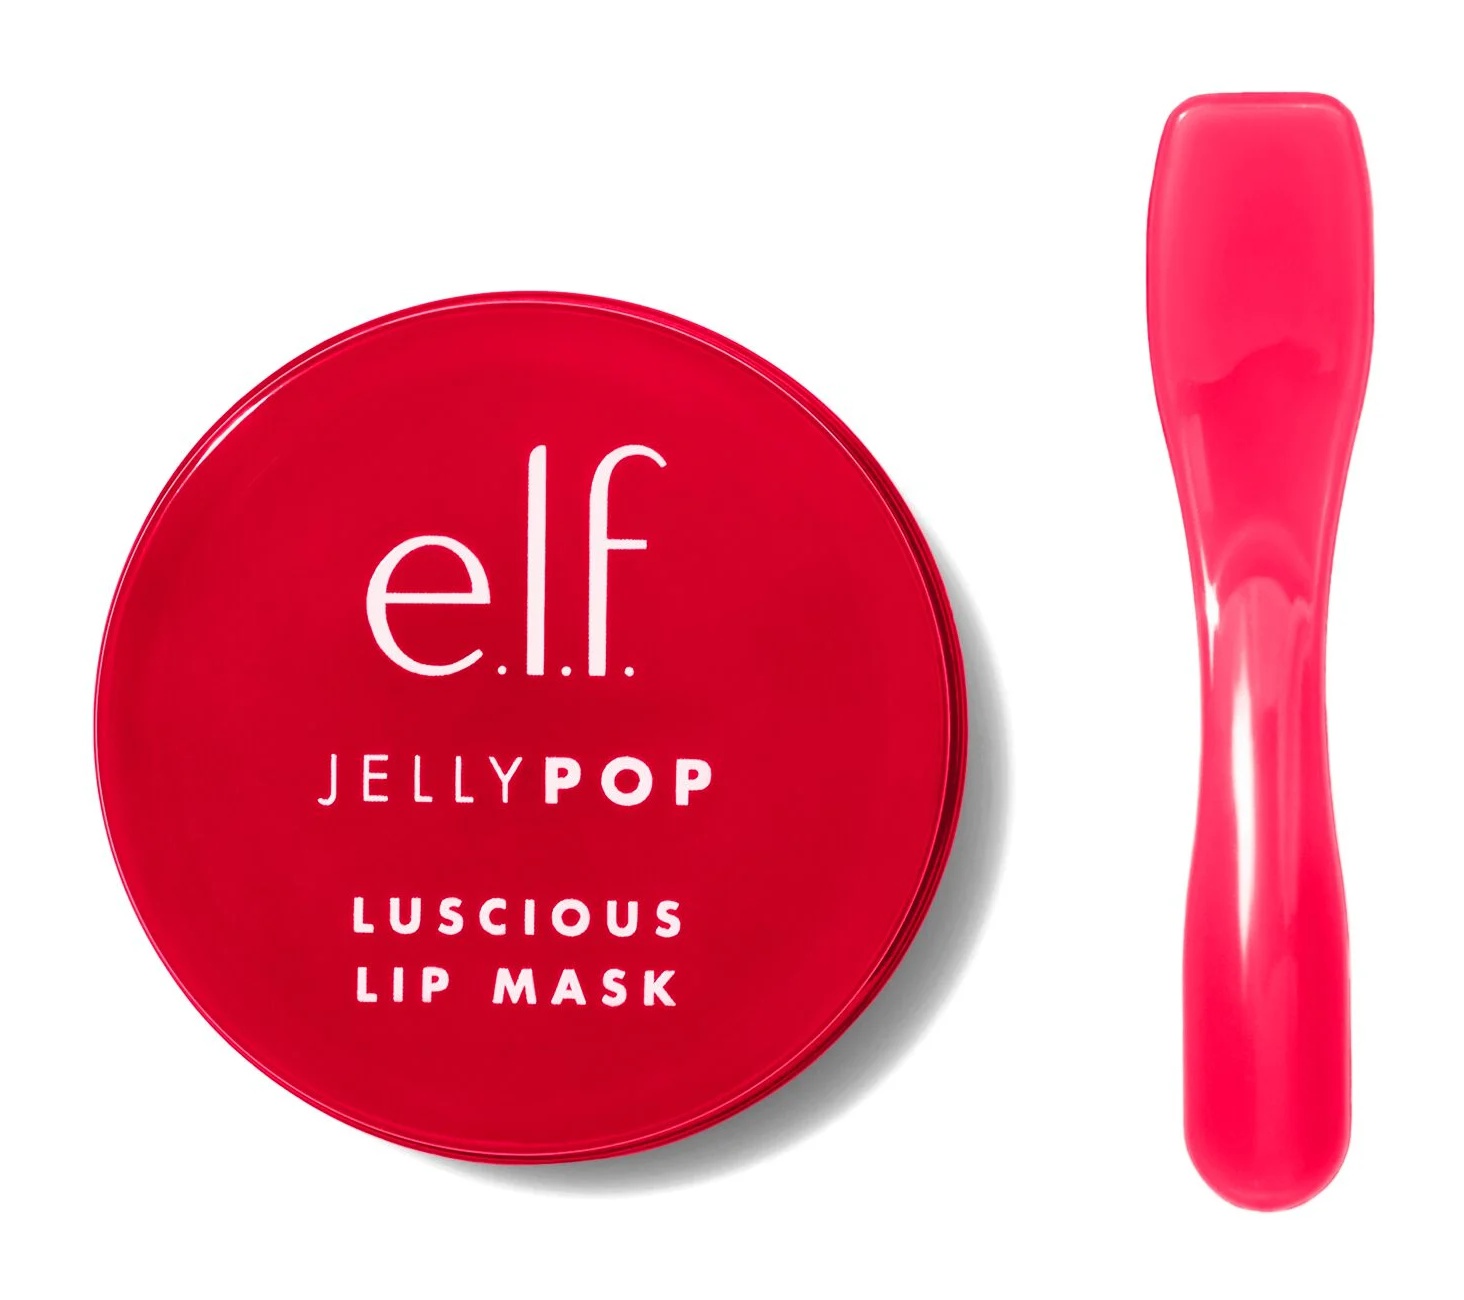 e.l.f. Jelly Pop Luscious Lip Mask